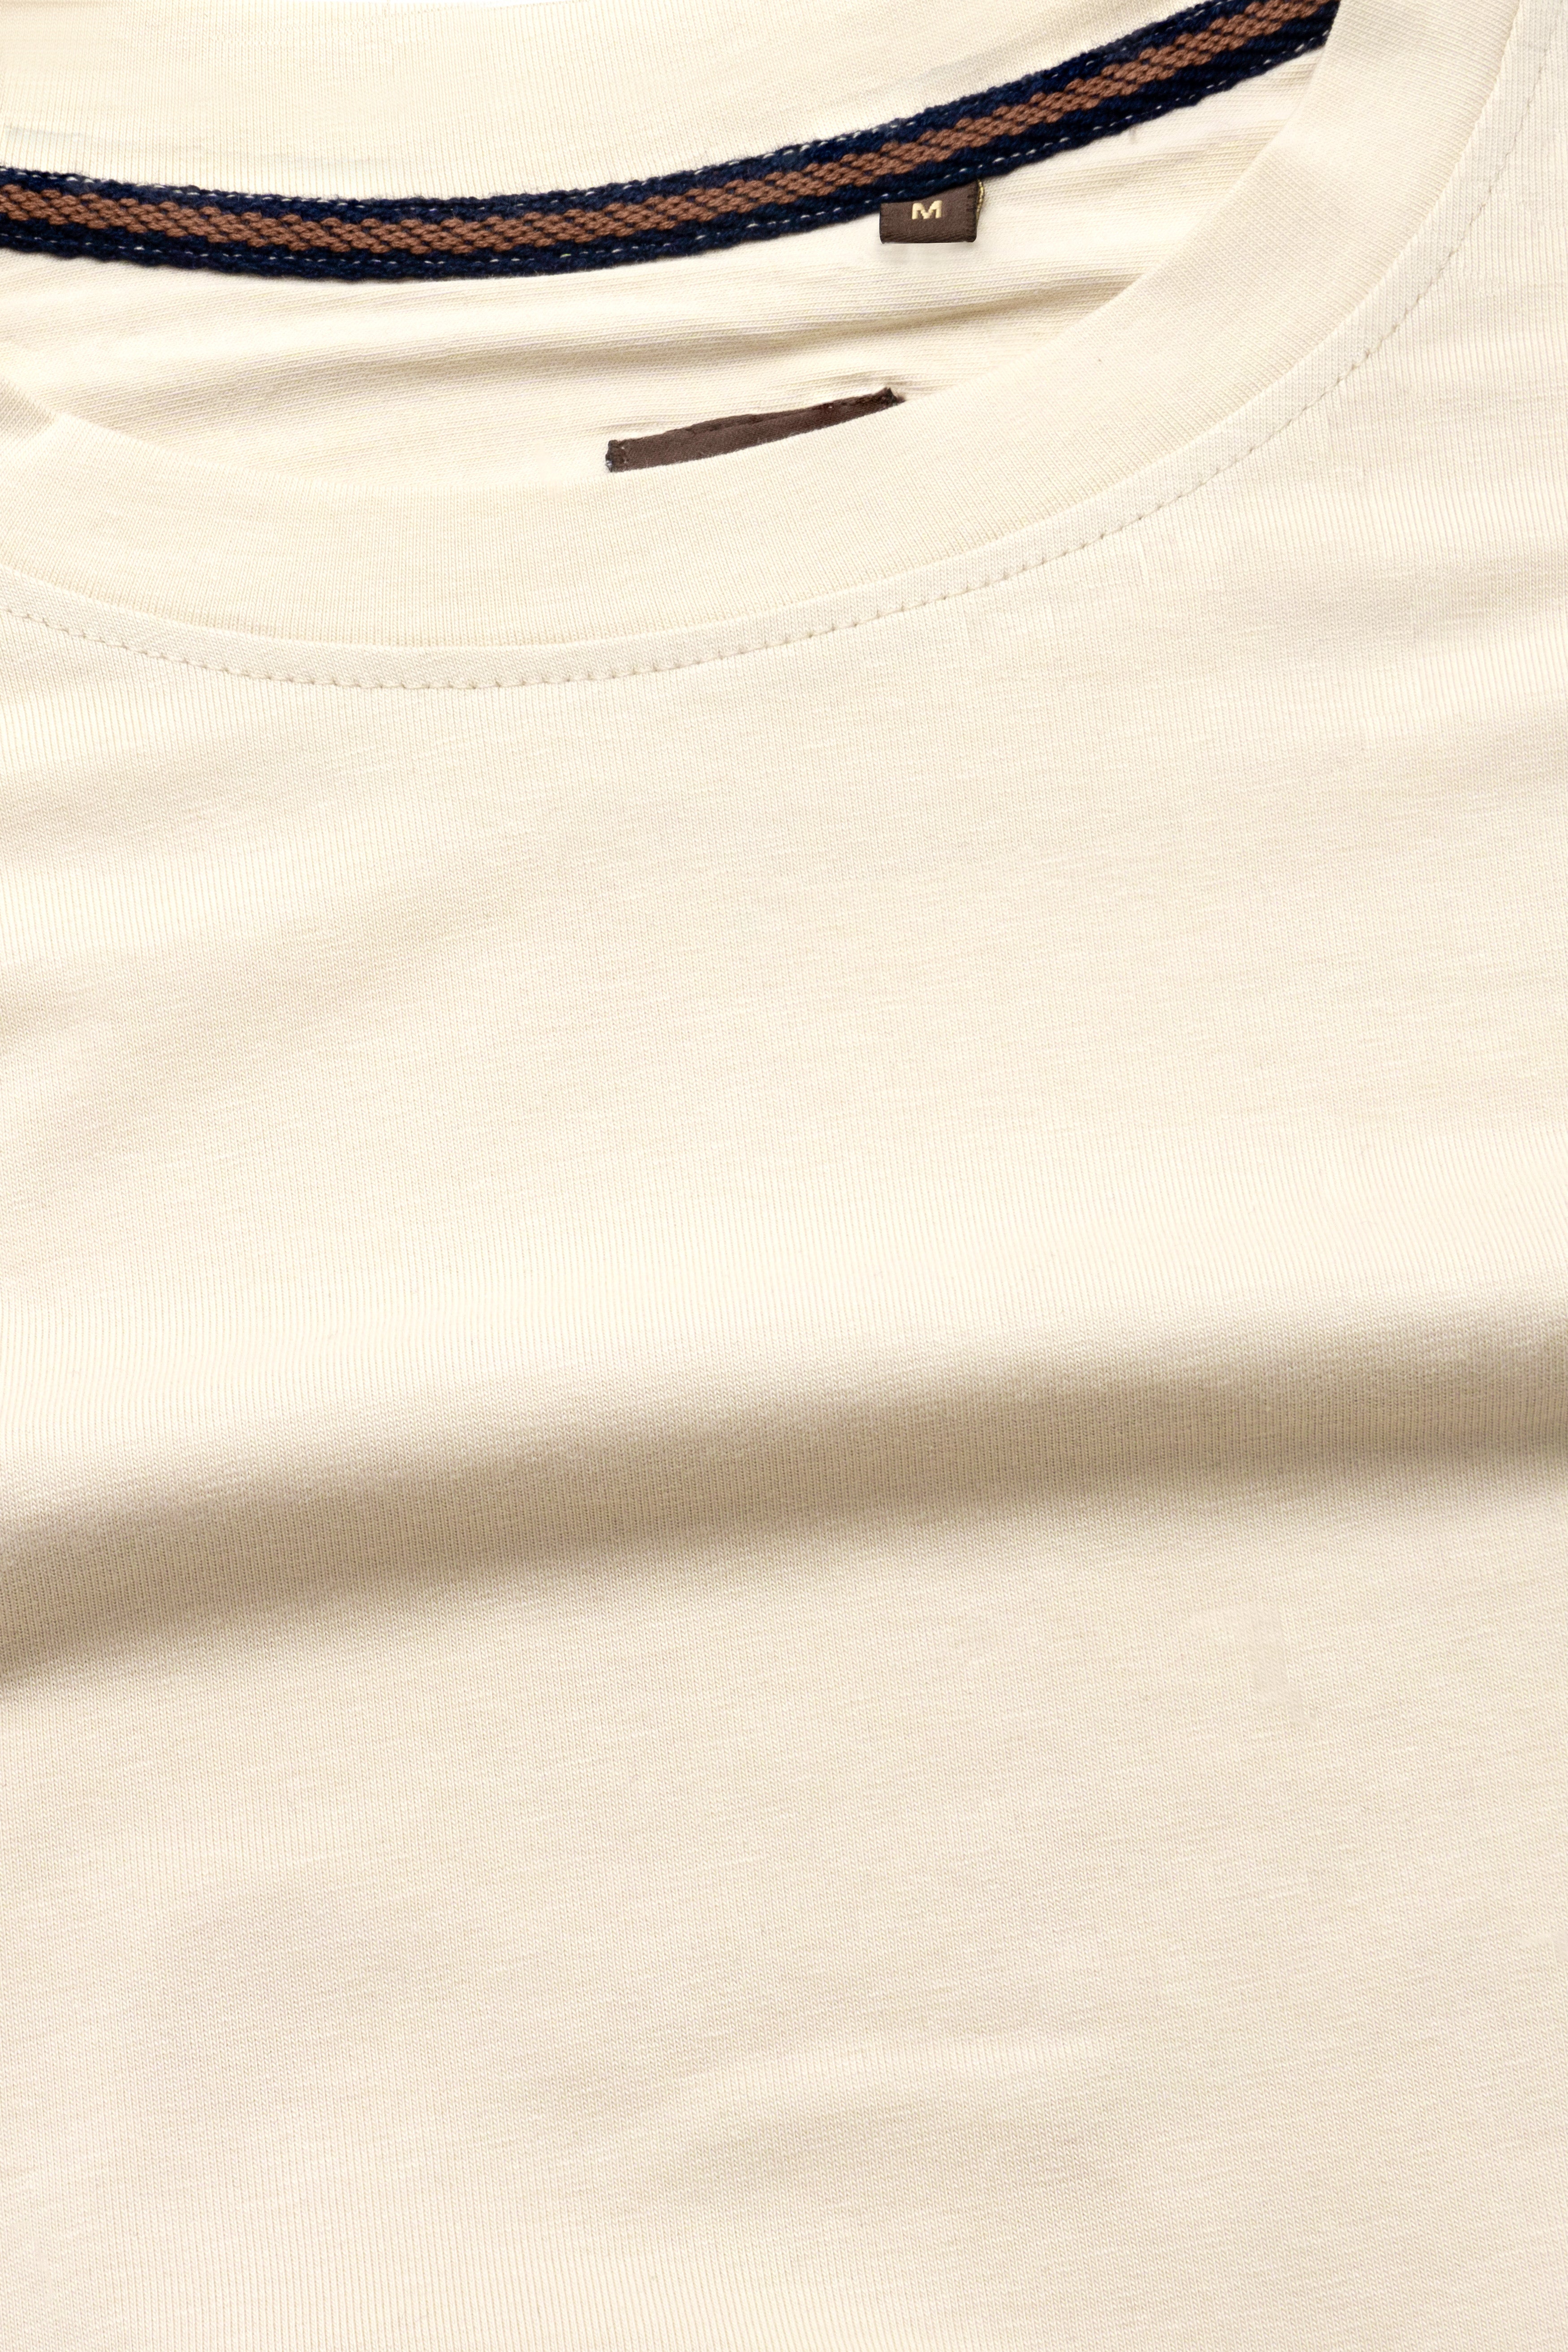 Almond Cream Printed Premium Cotton Oversized T-shirt TS957-S, TS957-M, TS957-L, TS957-XL, TS957-XXL